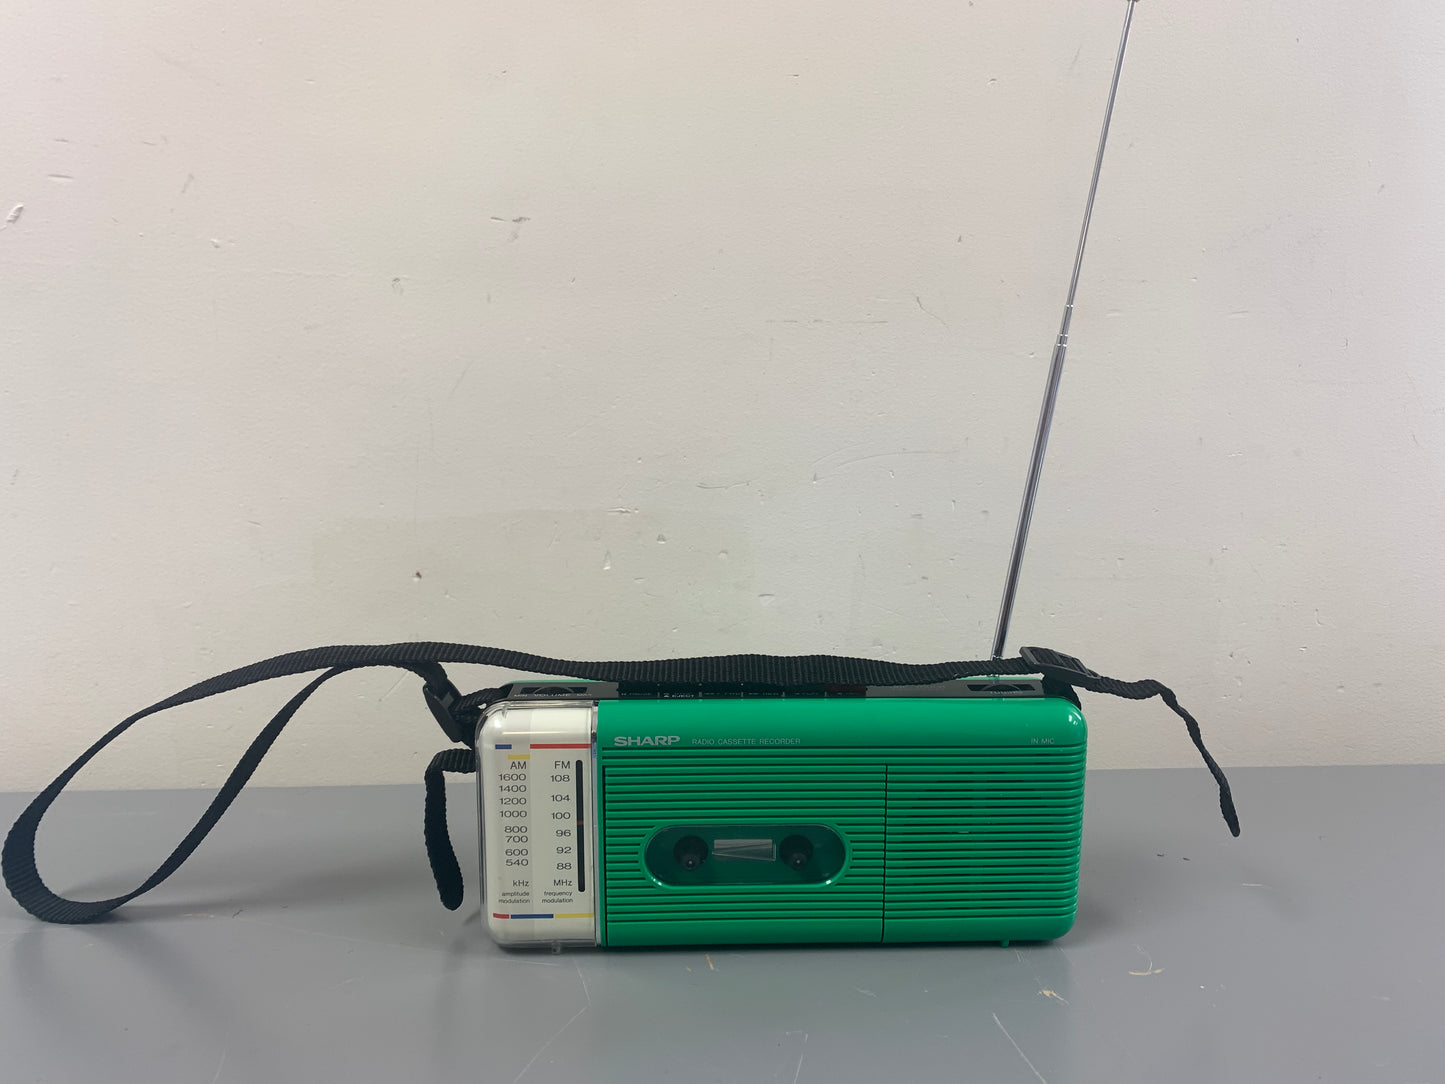 Sharp QT-V5 Portable Radio and Cassette